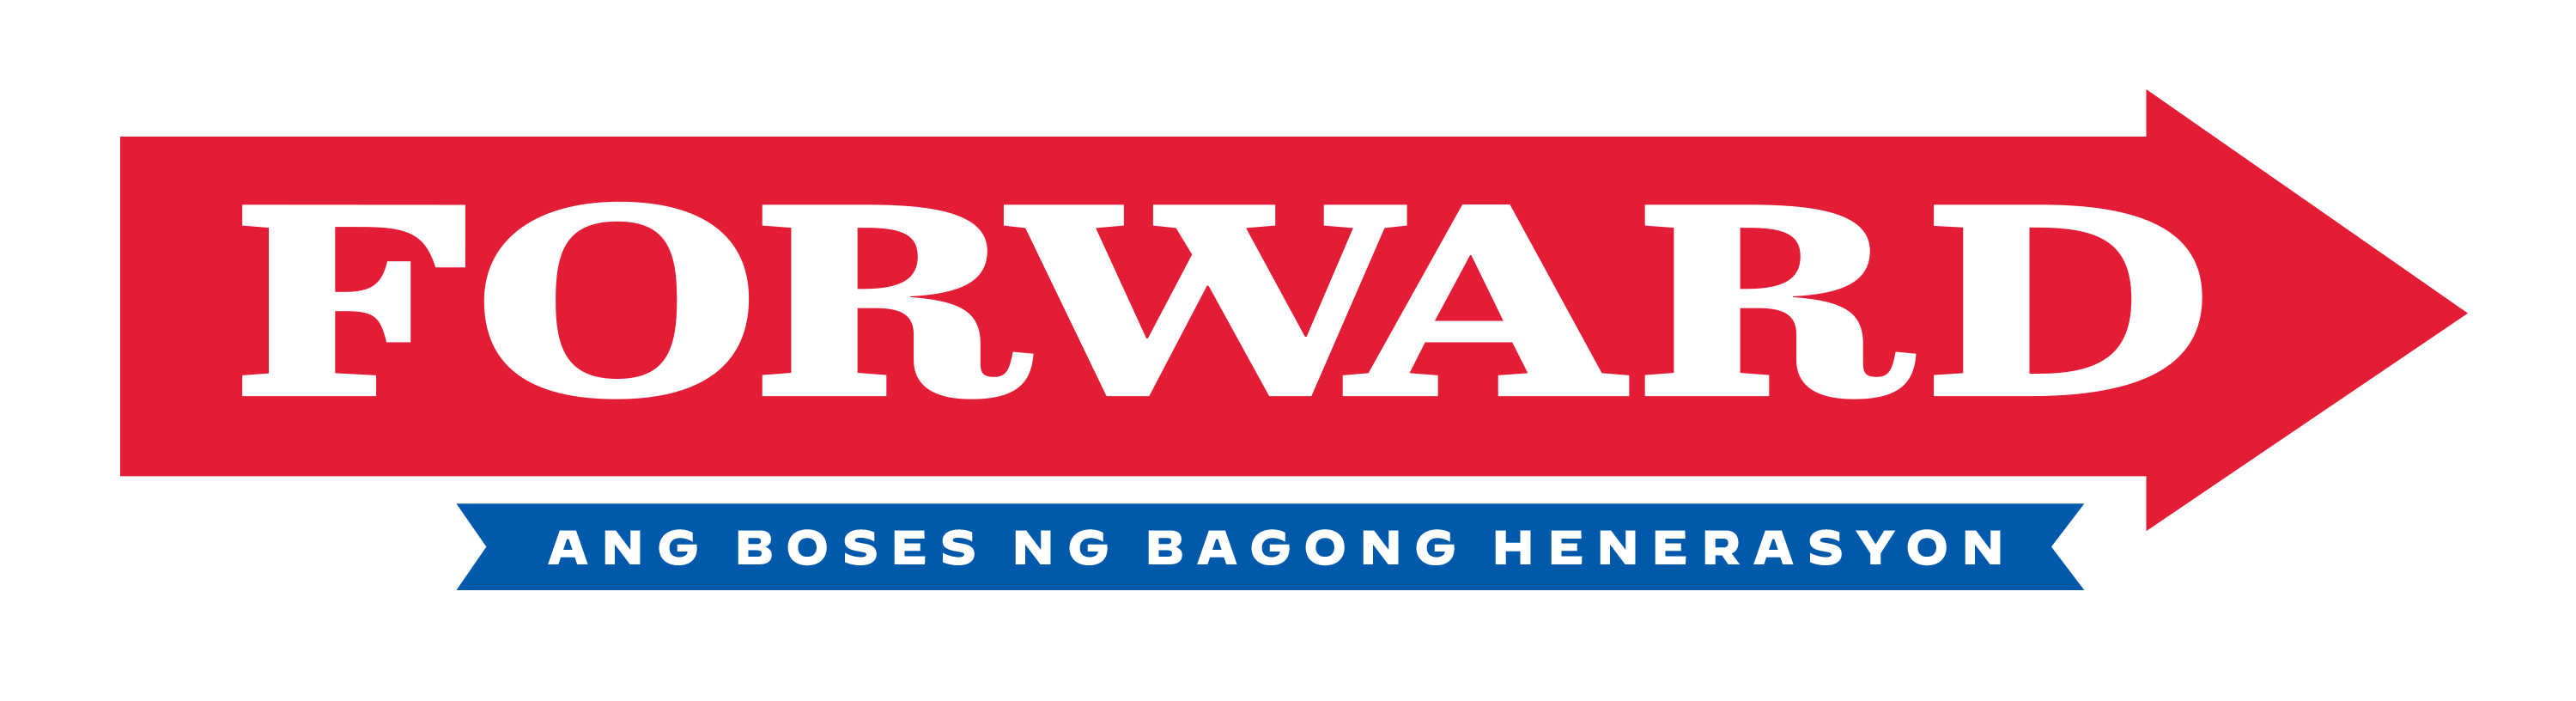 Forward Company News Publishing Logo